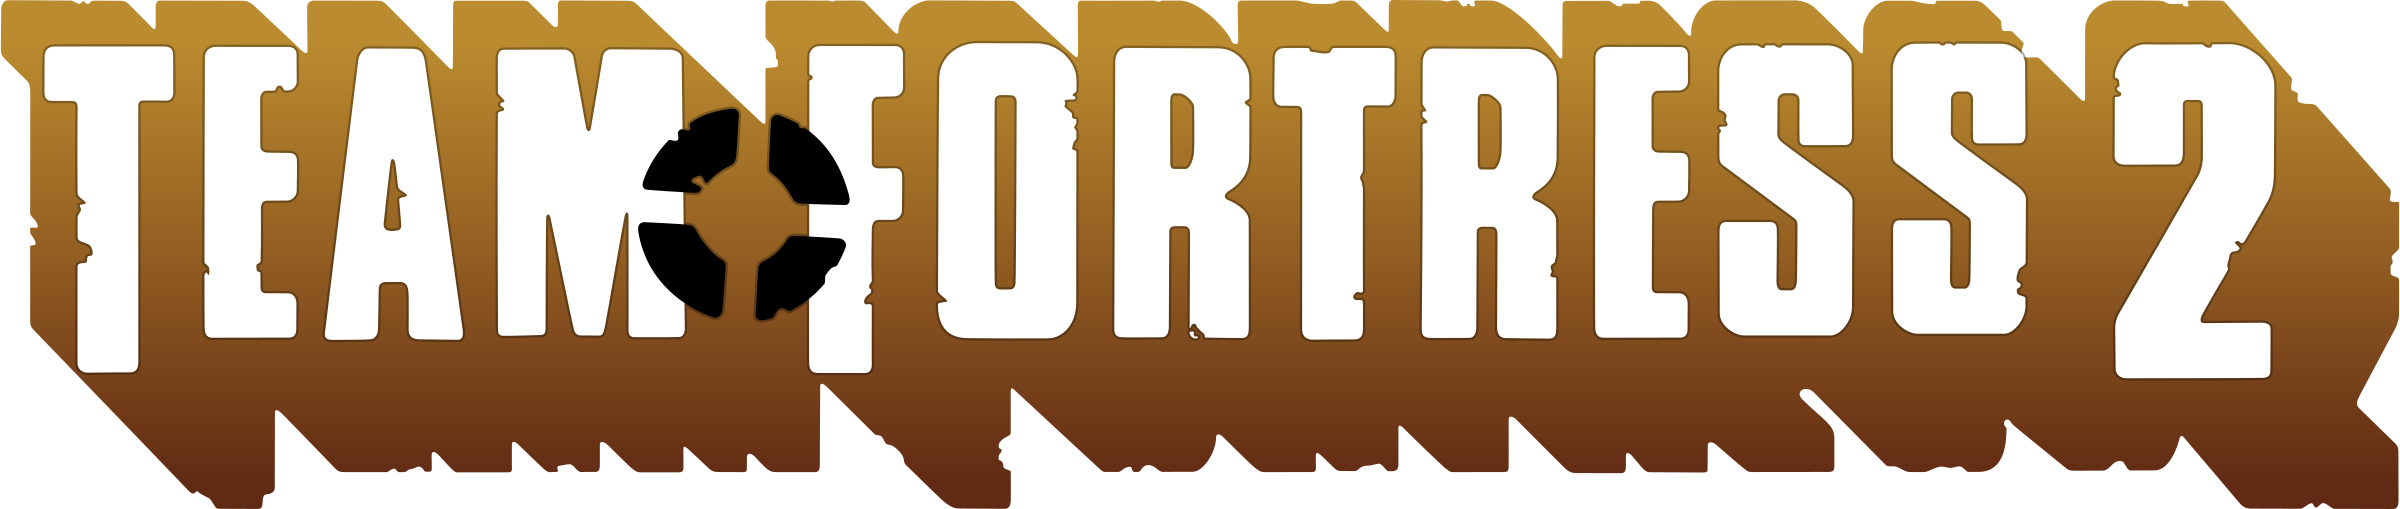 Team Fortress 2 Logo Free PNG Clip Art